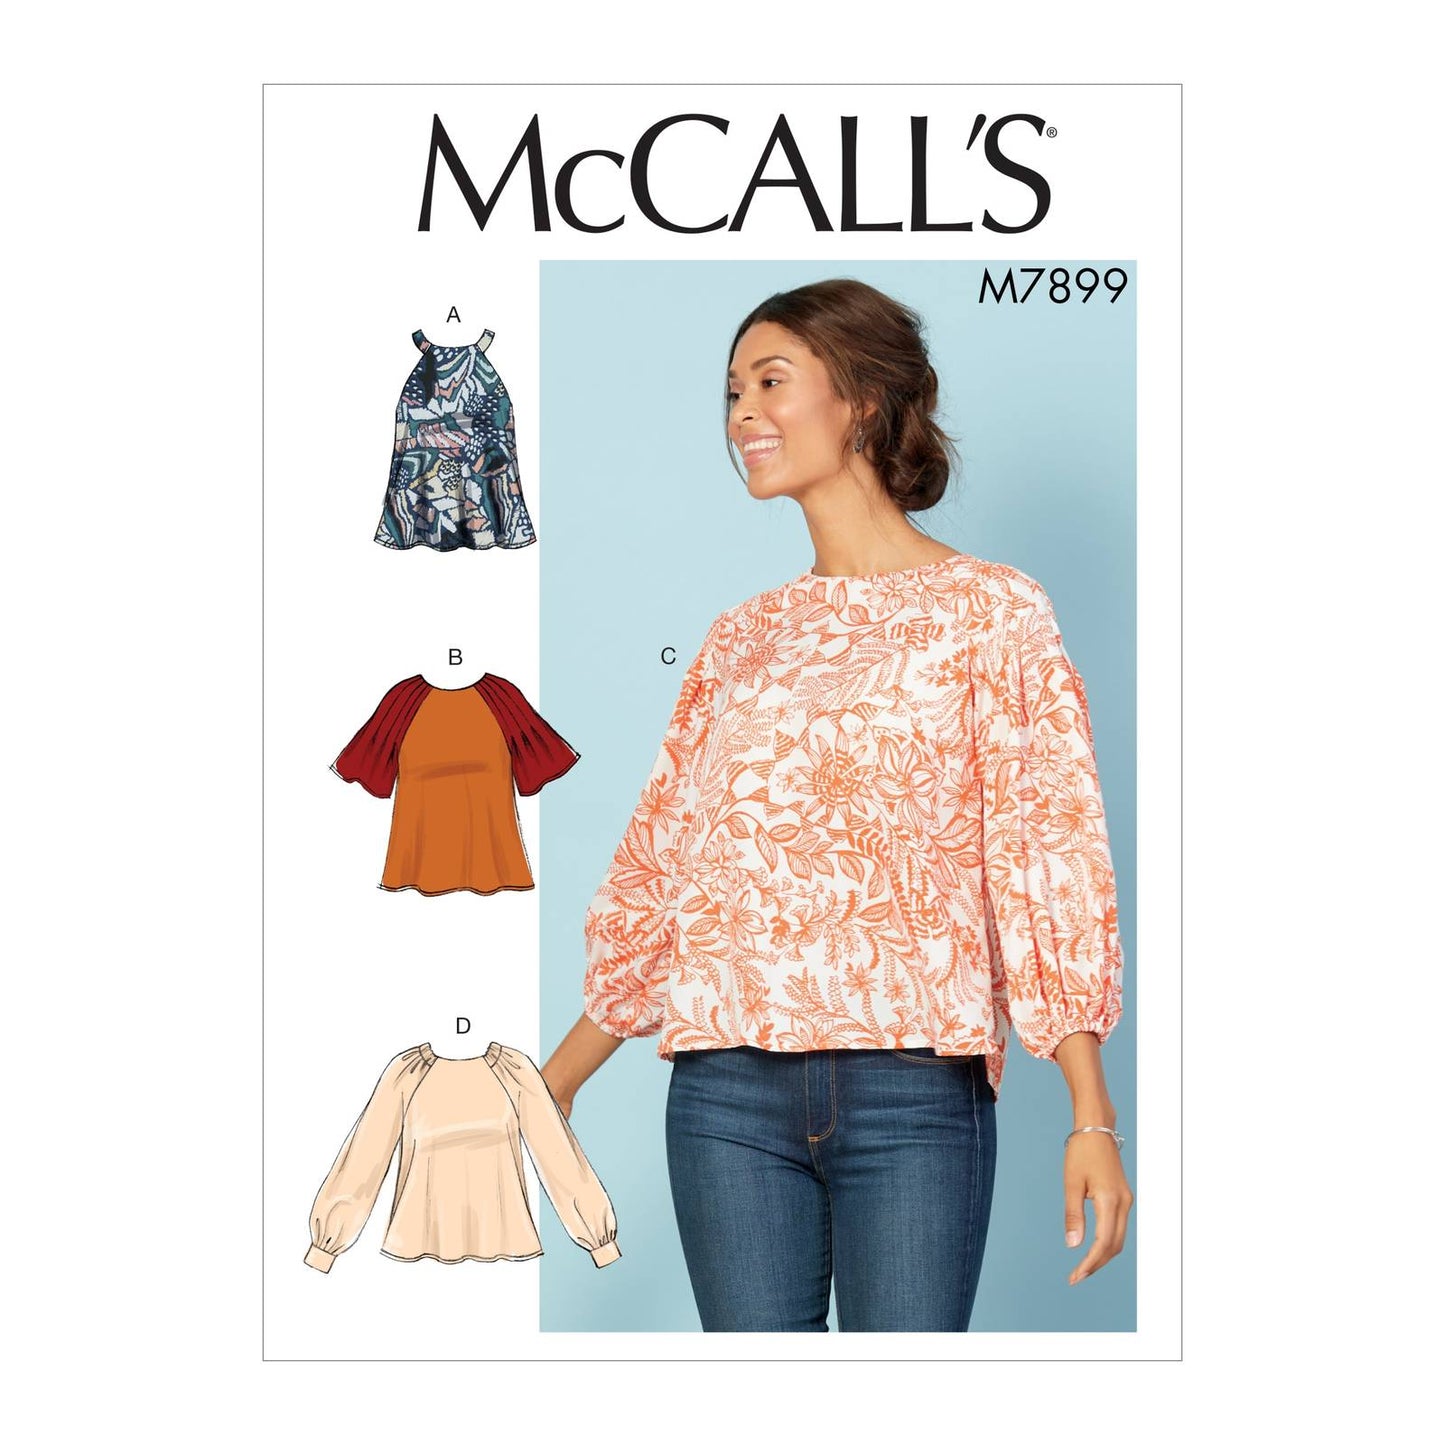 McCall's 7899